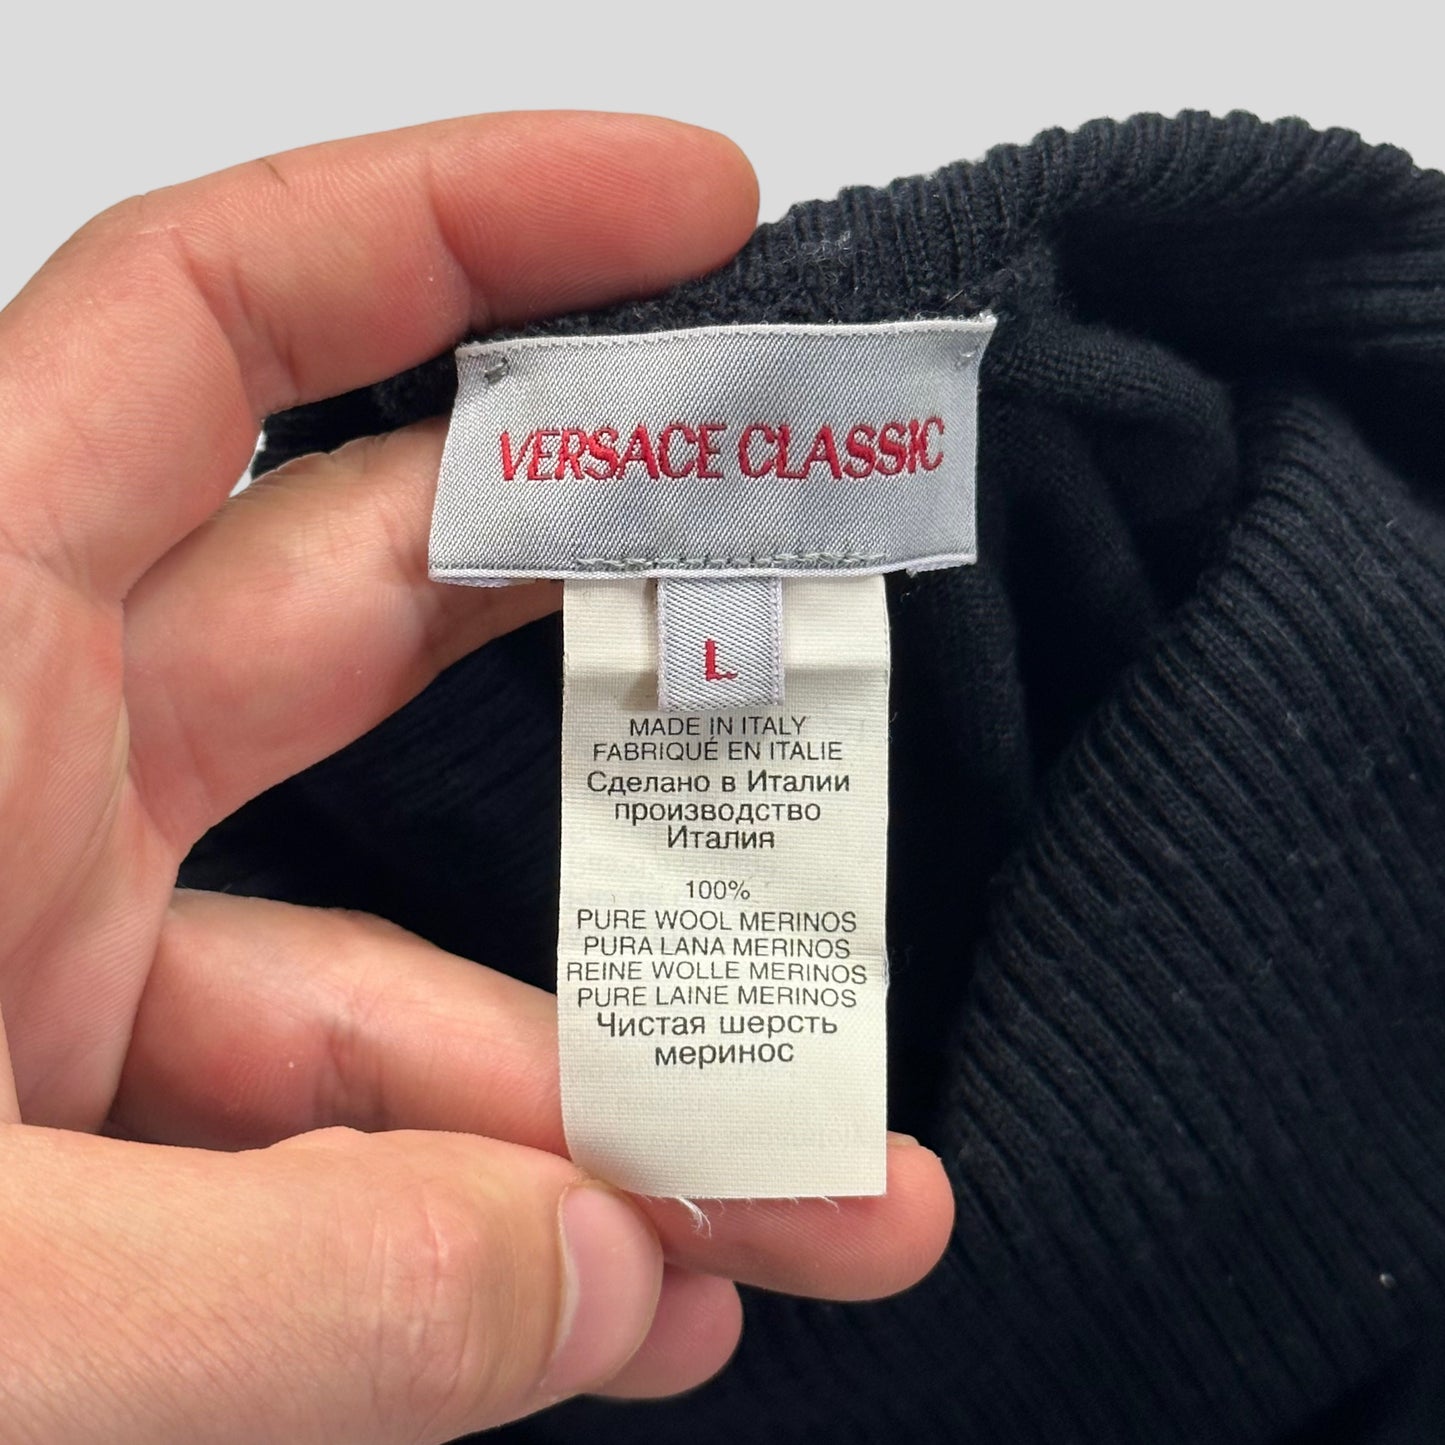 Versace Classic 00’s Merino Wool Rollneck Knit - M/L